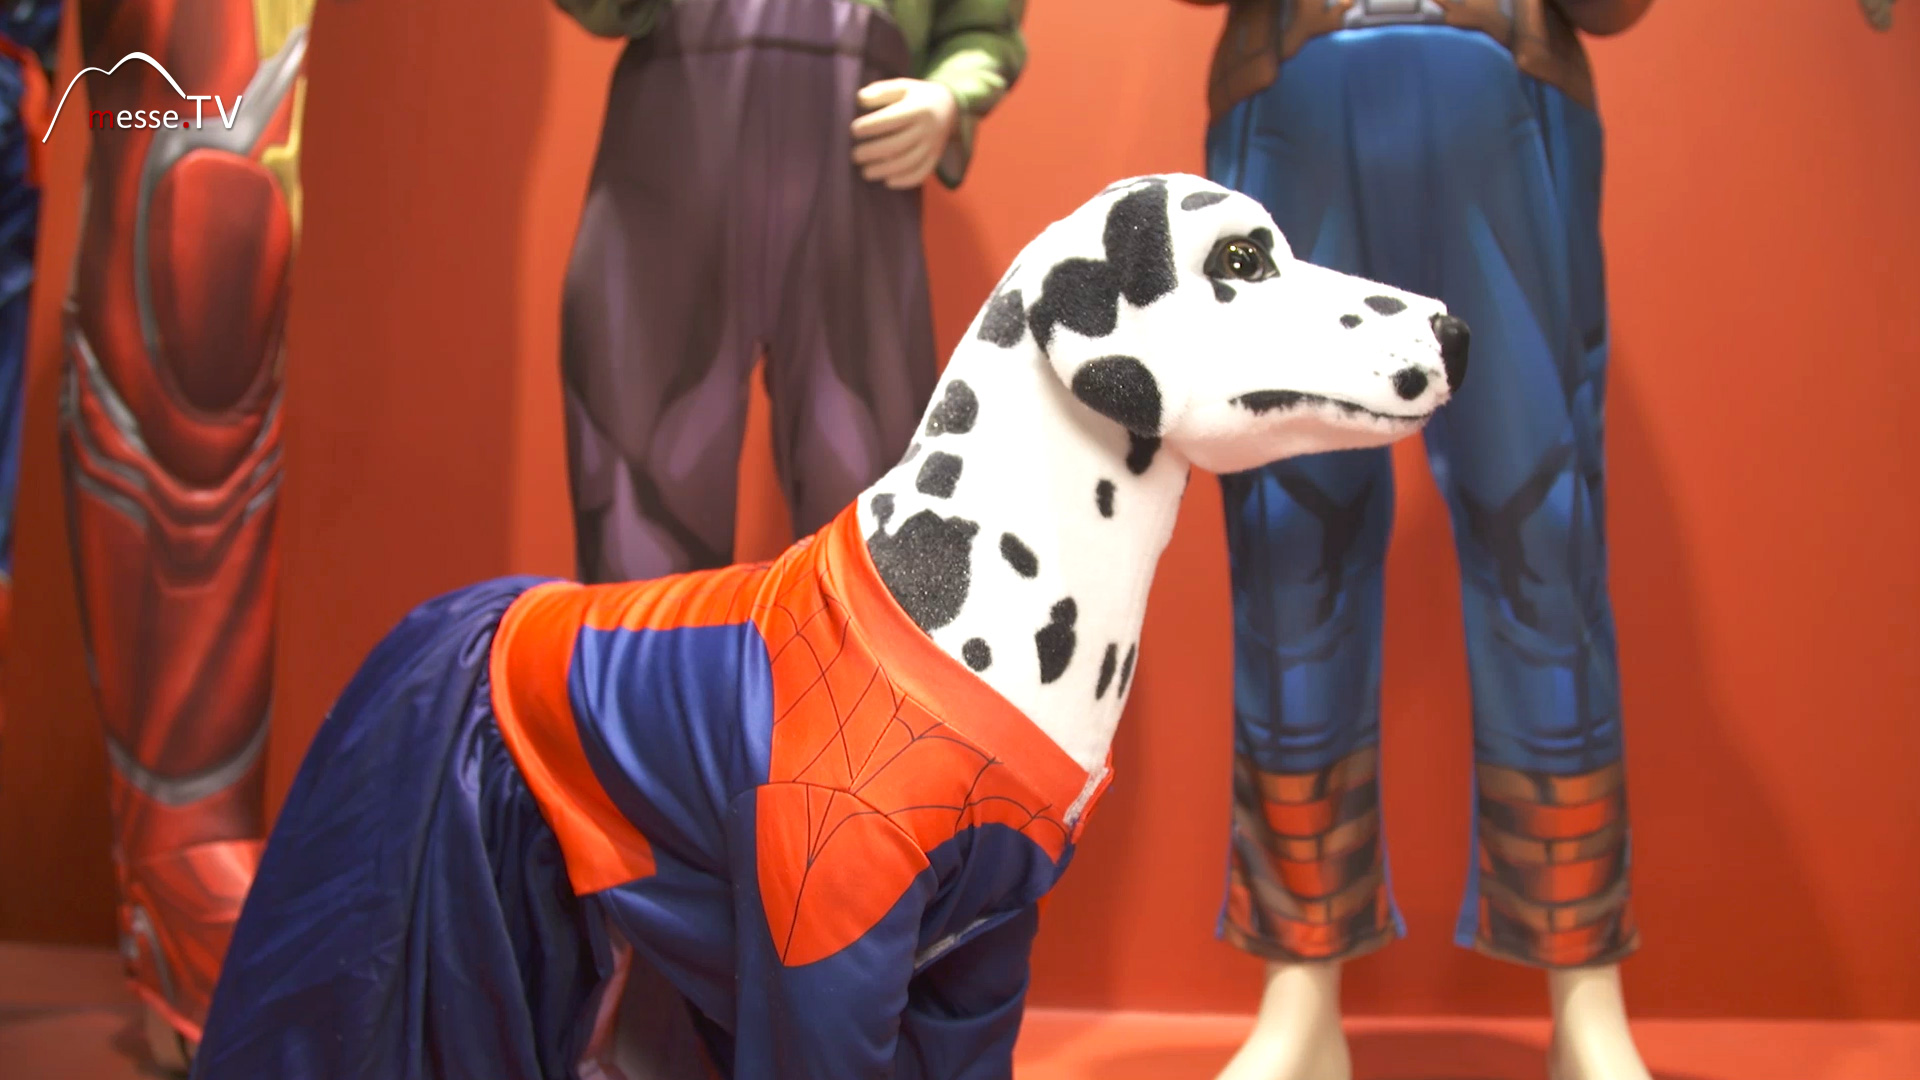 Rubies Avengers costume dog